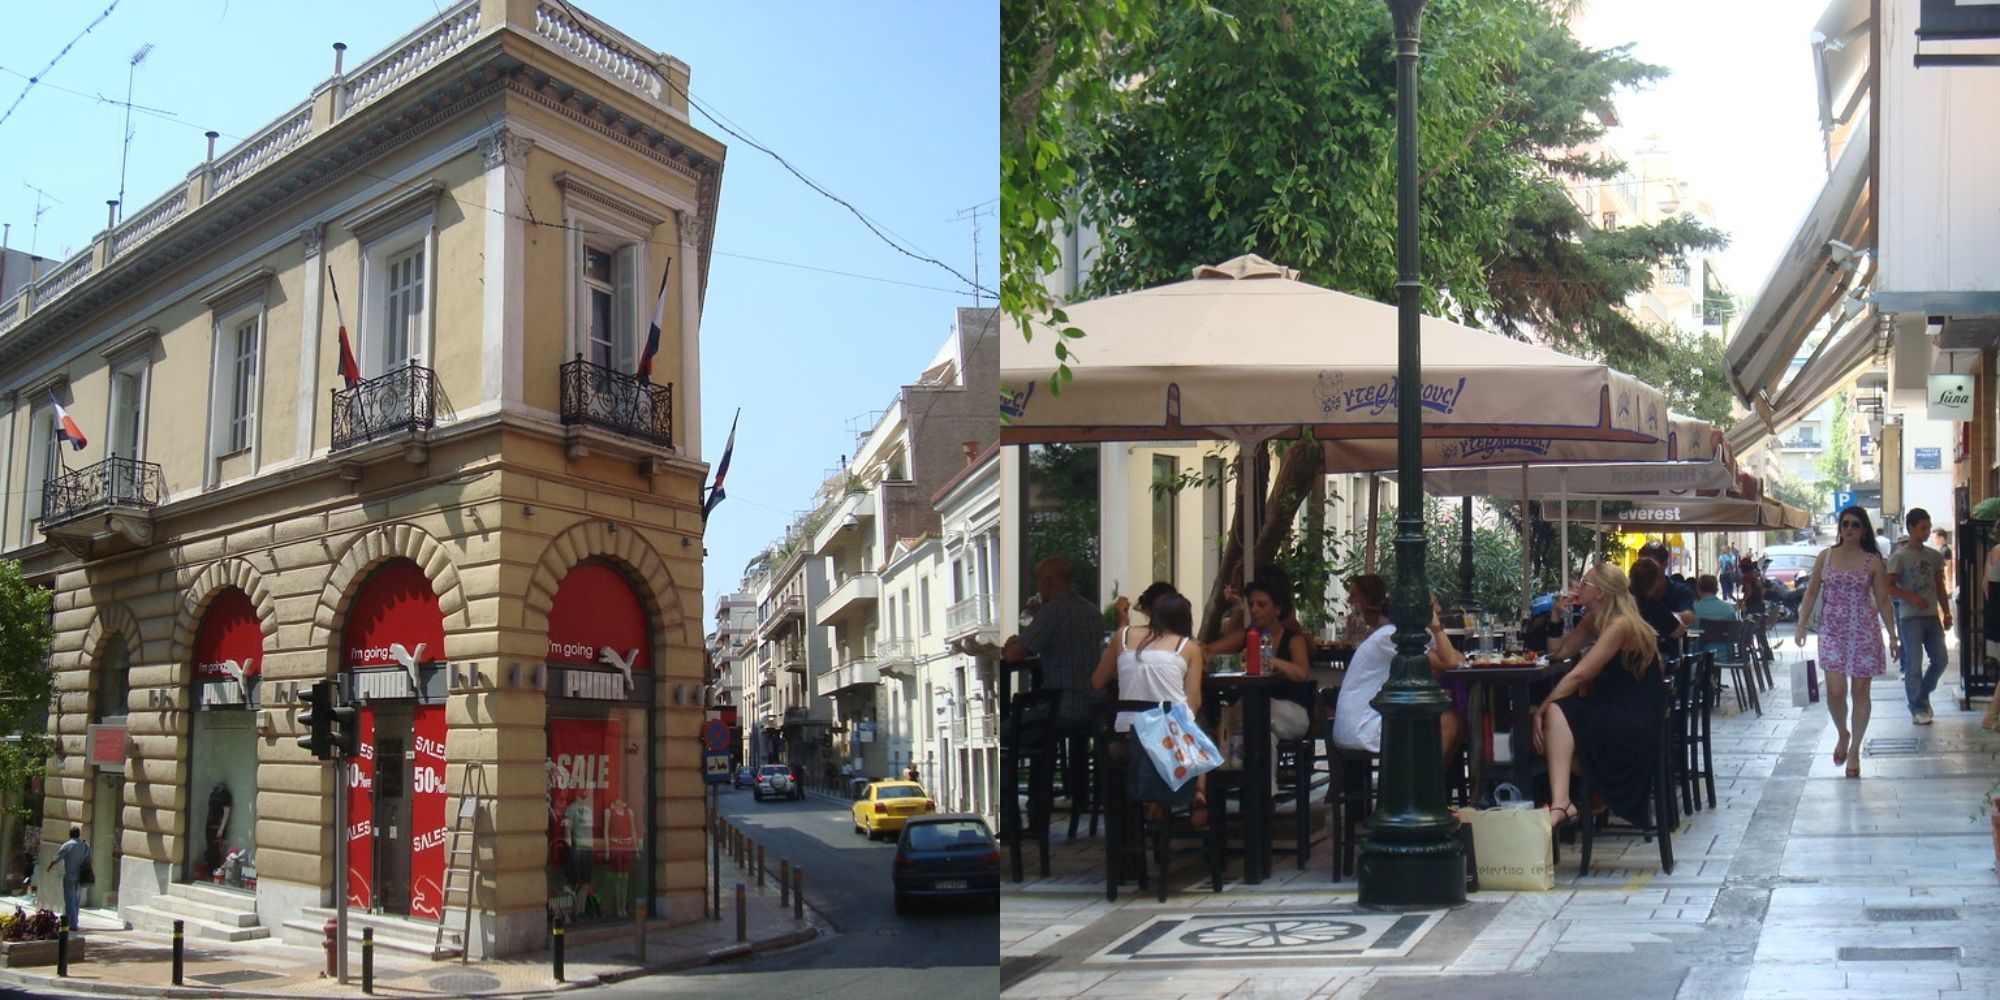 Buildings Cafe And People In Kolonaki Neighborhood In Greece